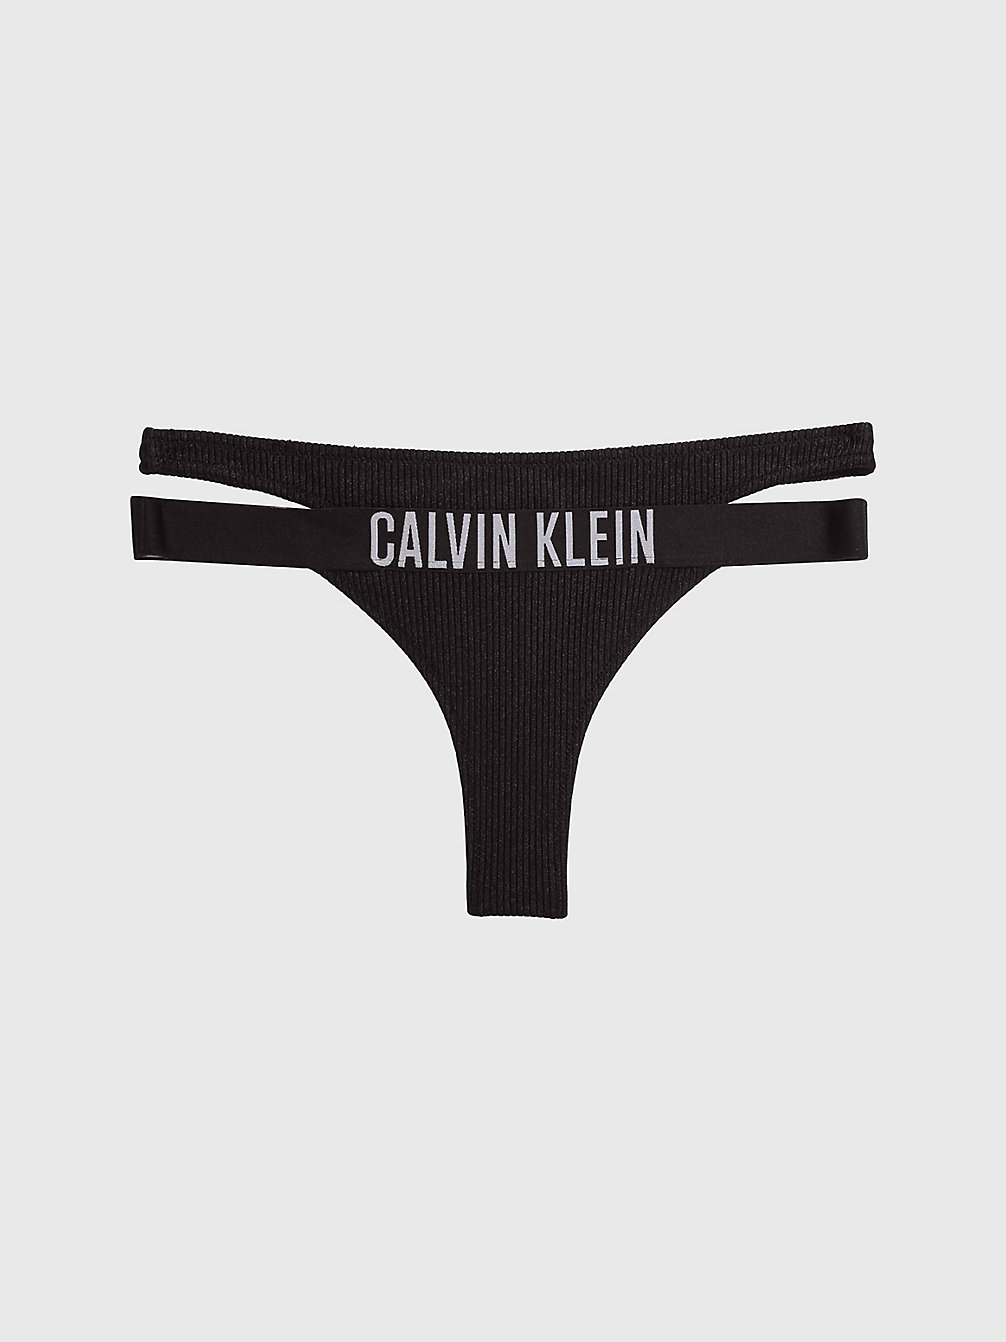 PVH BLACK > String Bikinibroekje - Intense Power > undefined dames - Calvin Klein